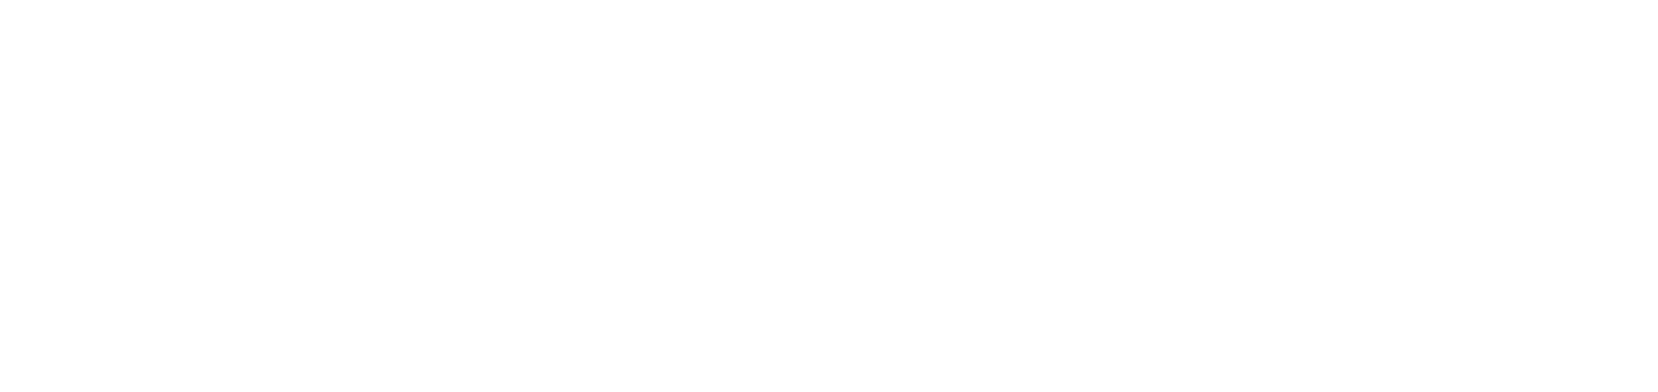 squarespace-logo-horizontal-white.png